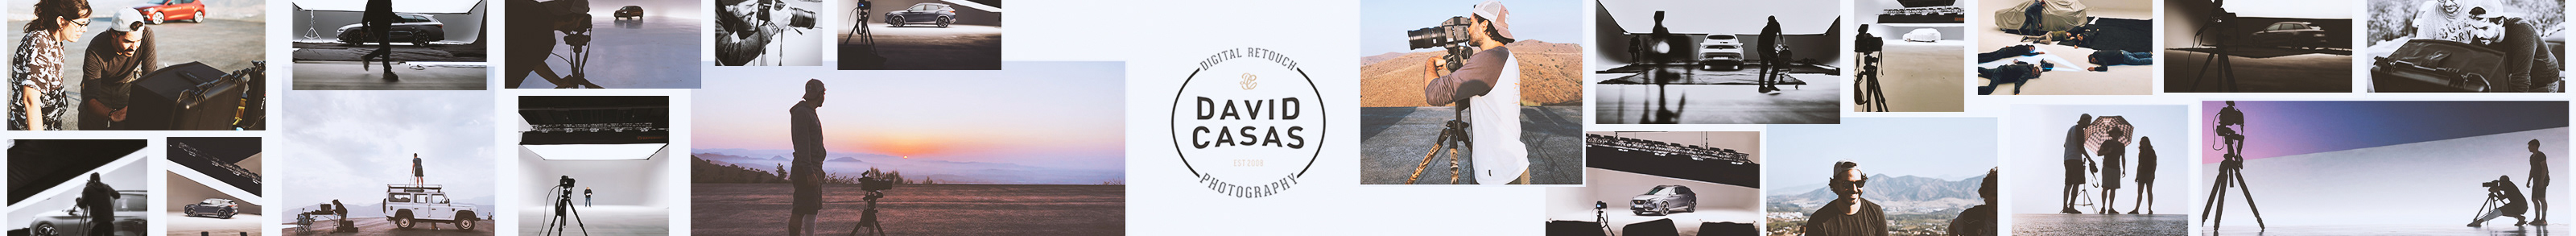 David Casas's profile banner